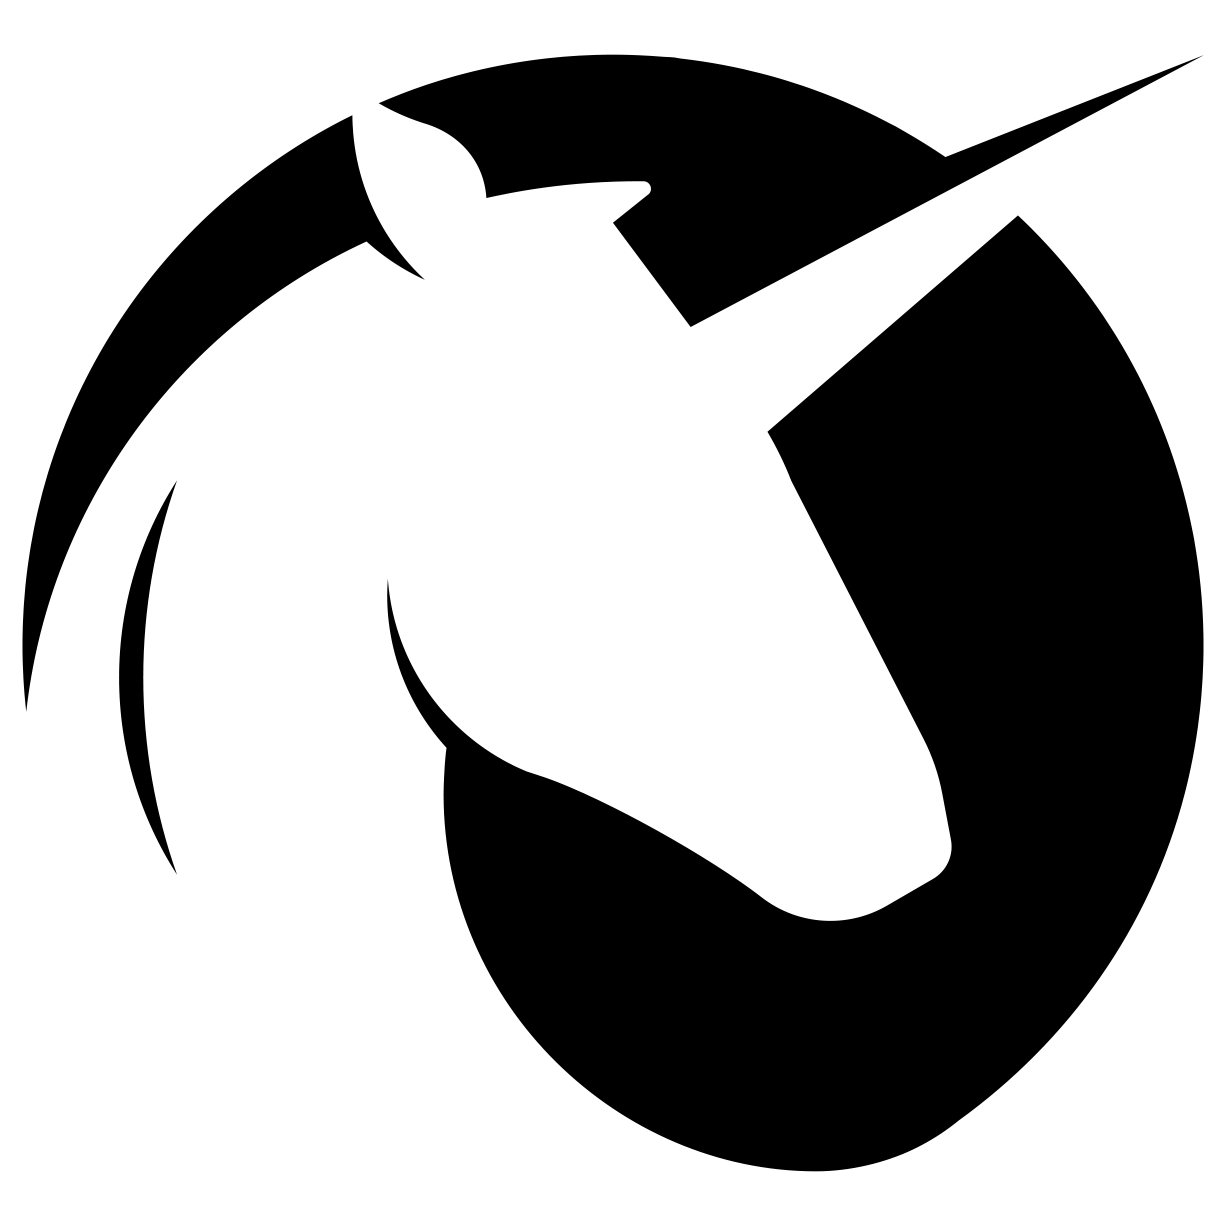 Unicorn Black and White Logo - Contact Us Unicorn PR